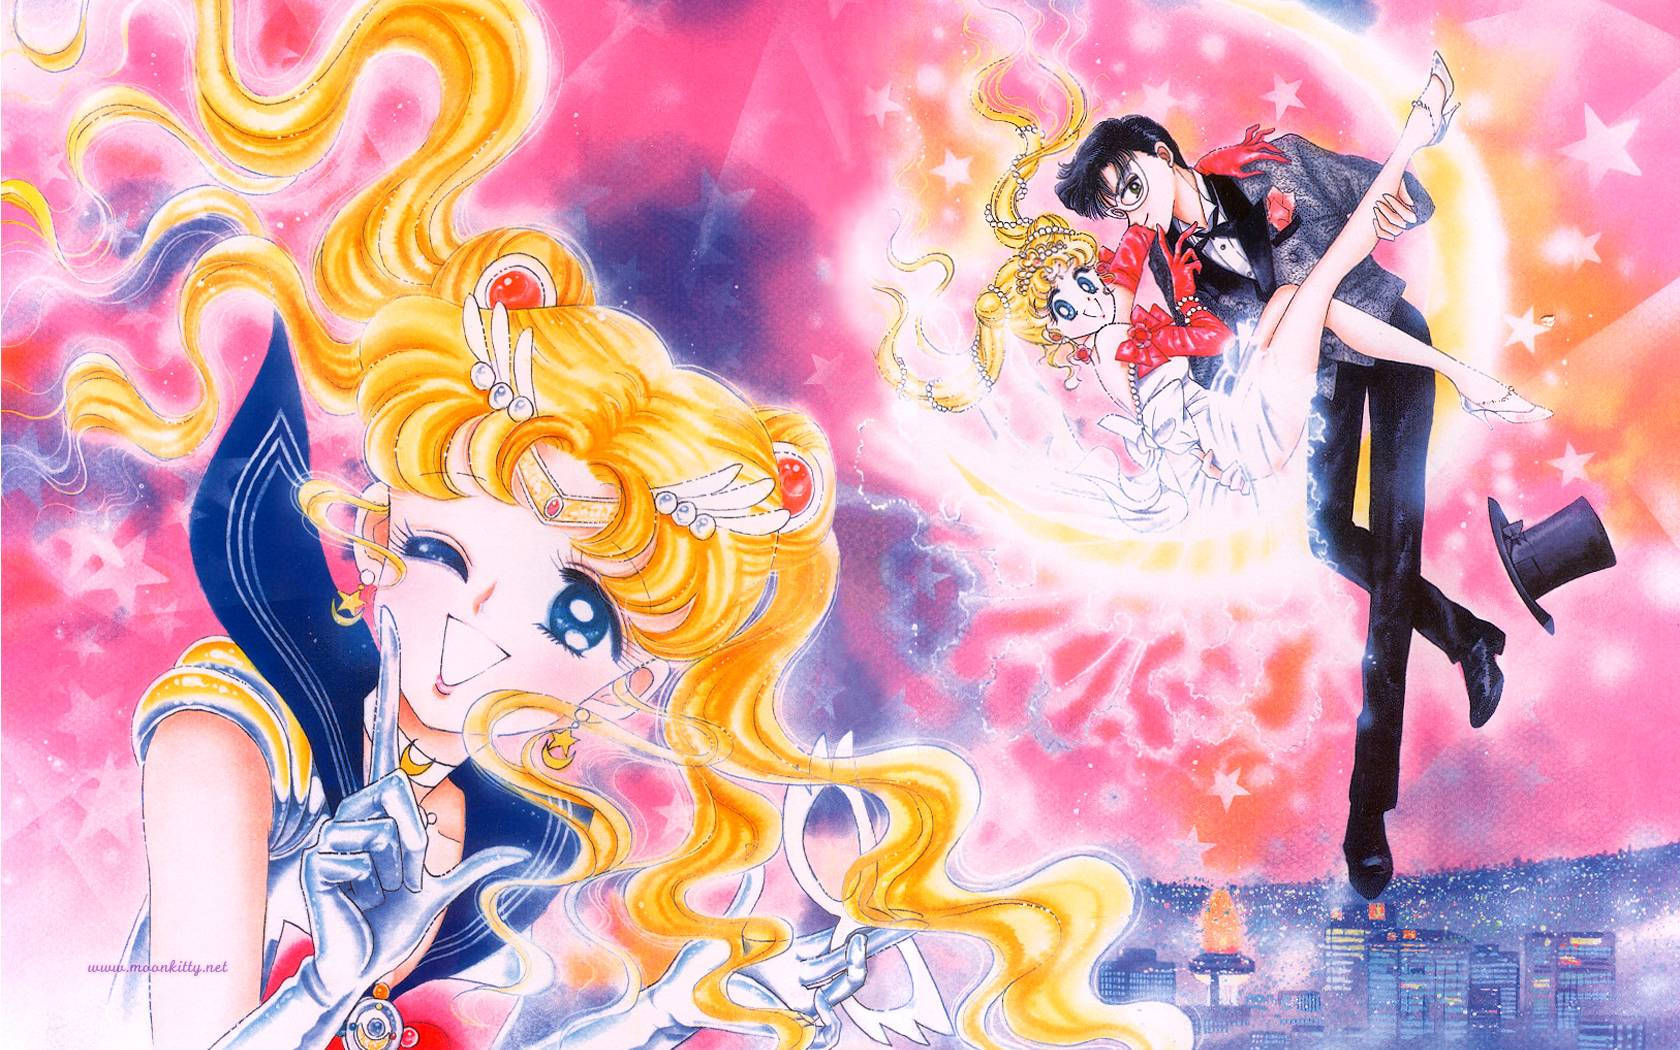 Sailor Moon Artwork